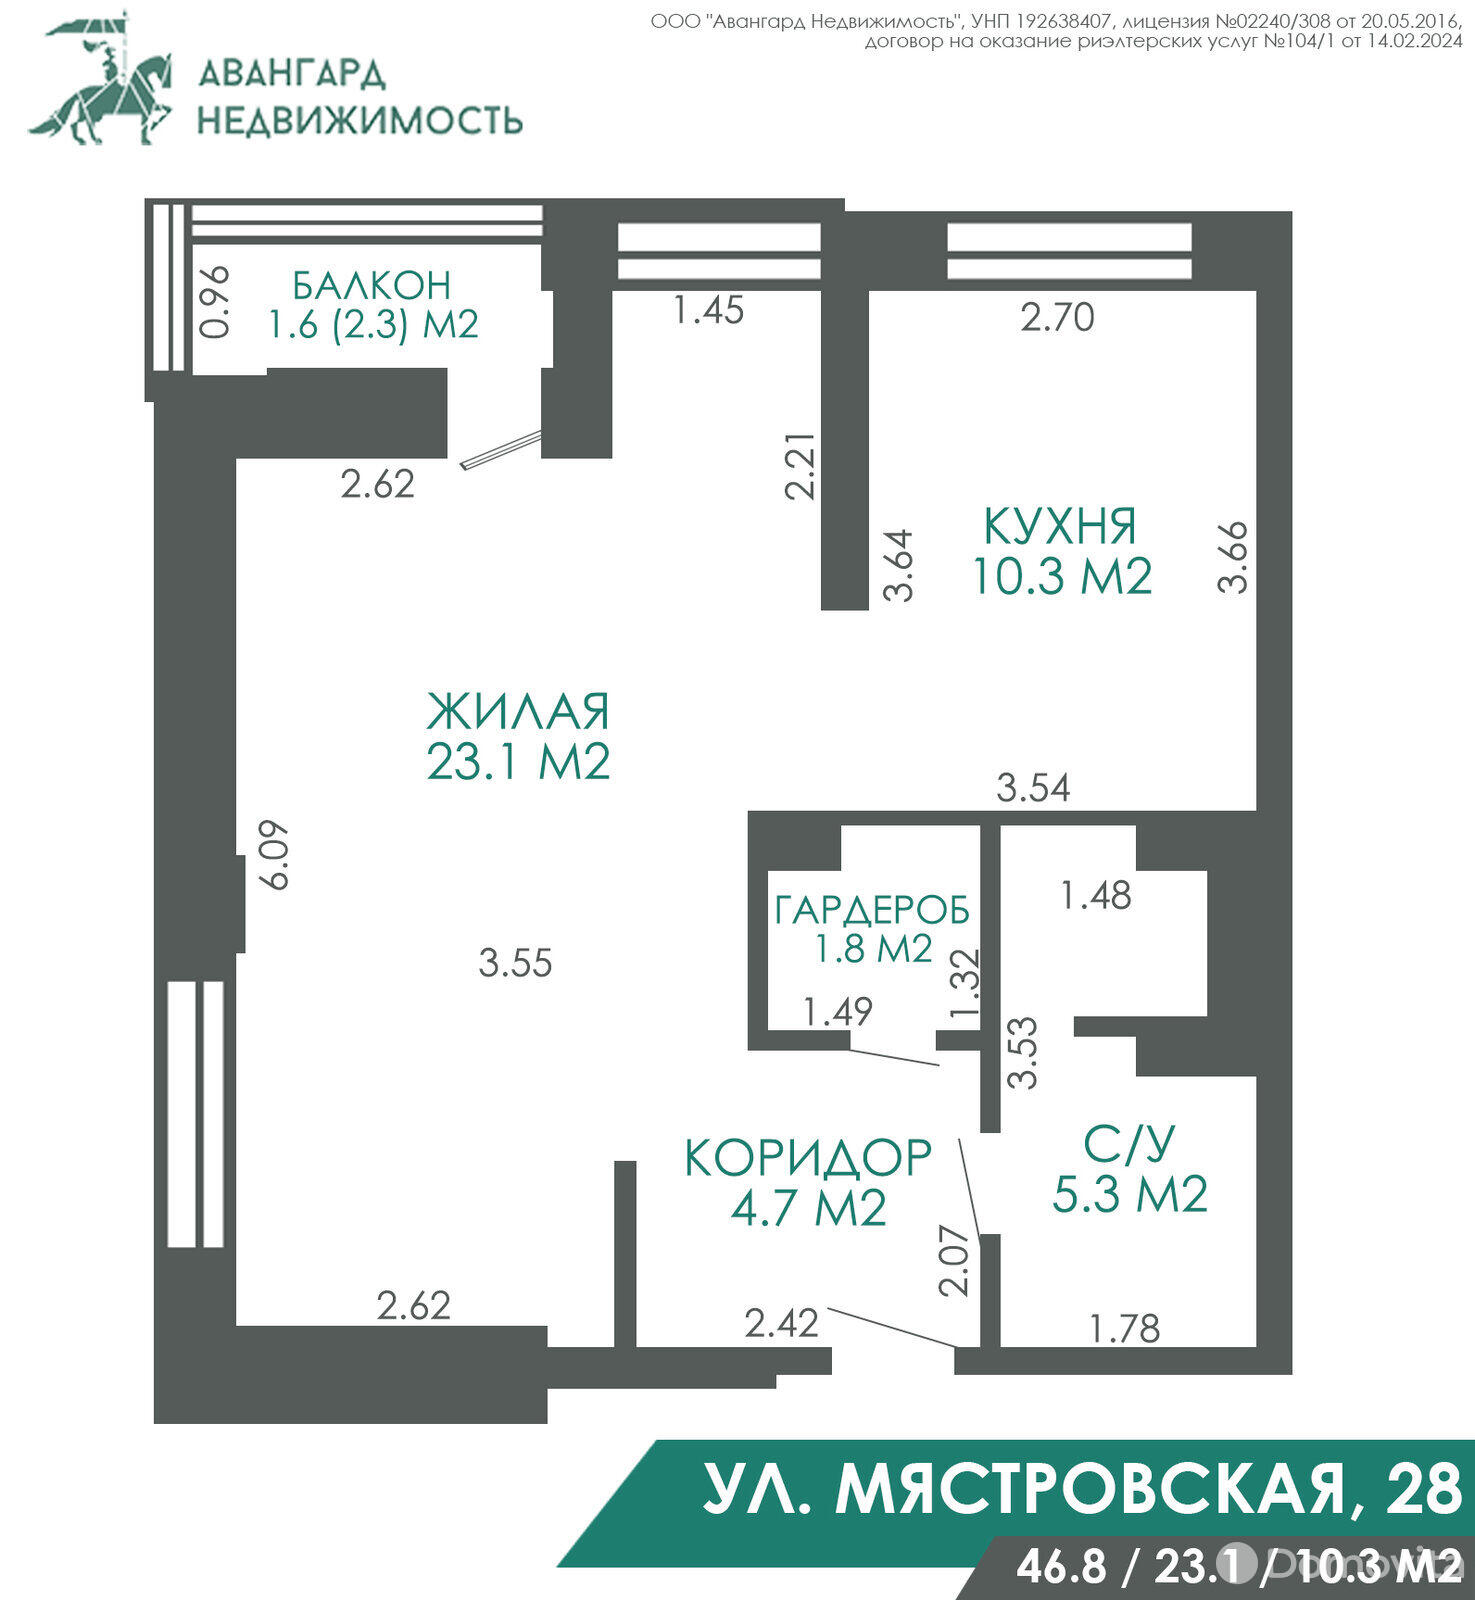 Цена продажи квартиры, Минск, ул. Мястровская, д. 28